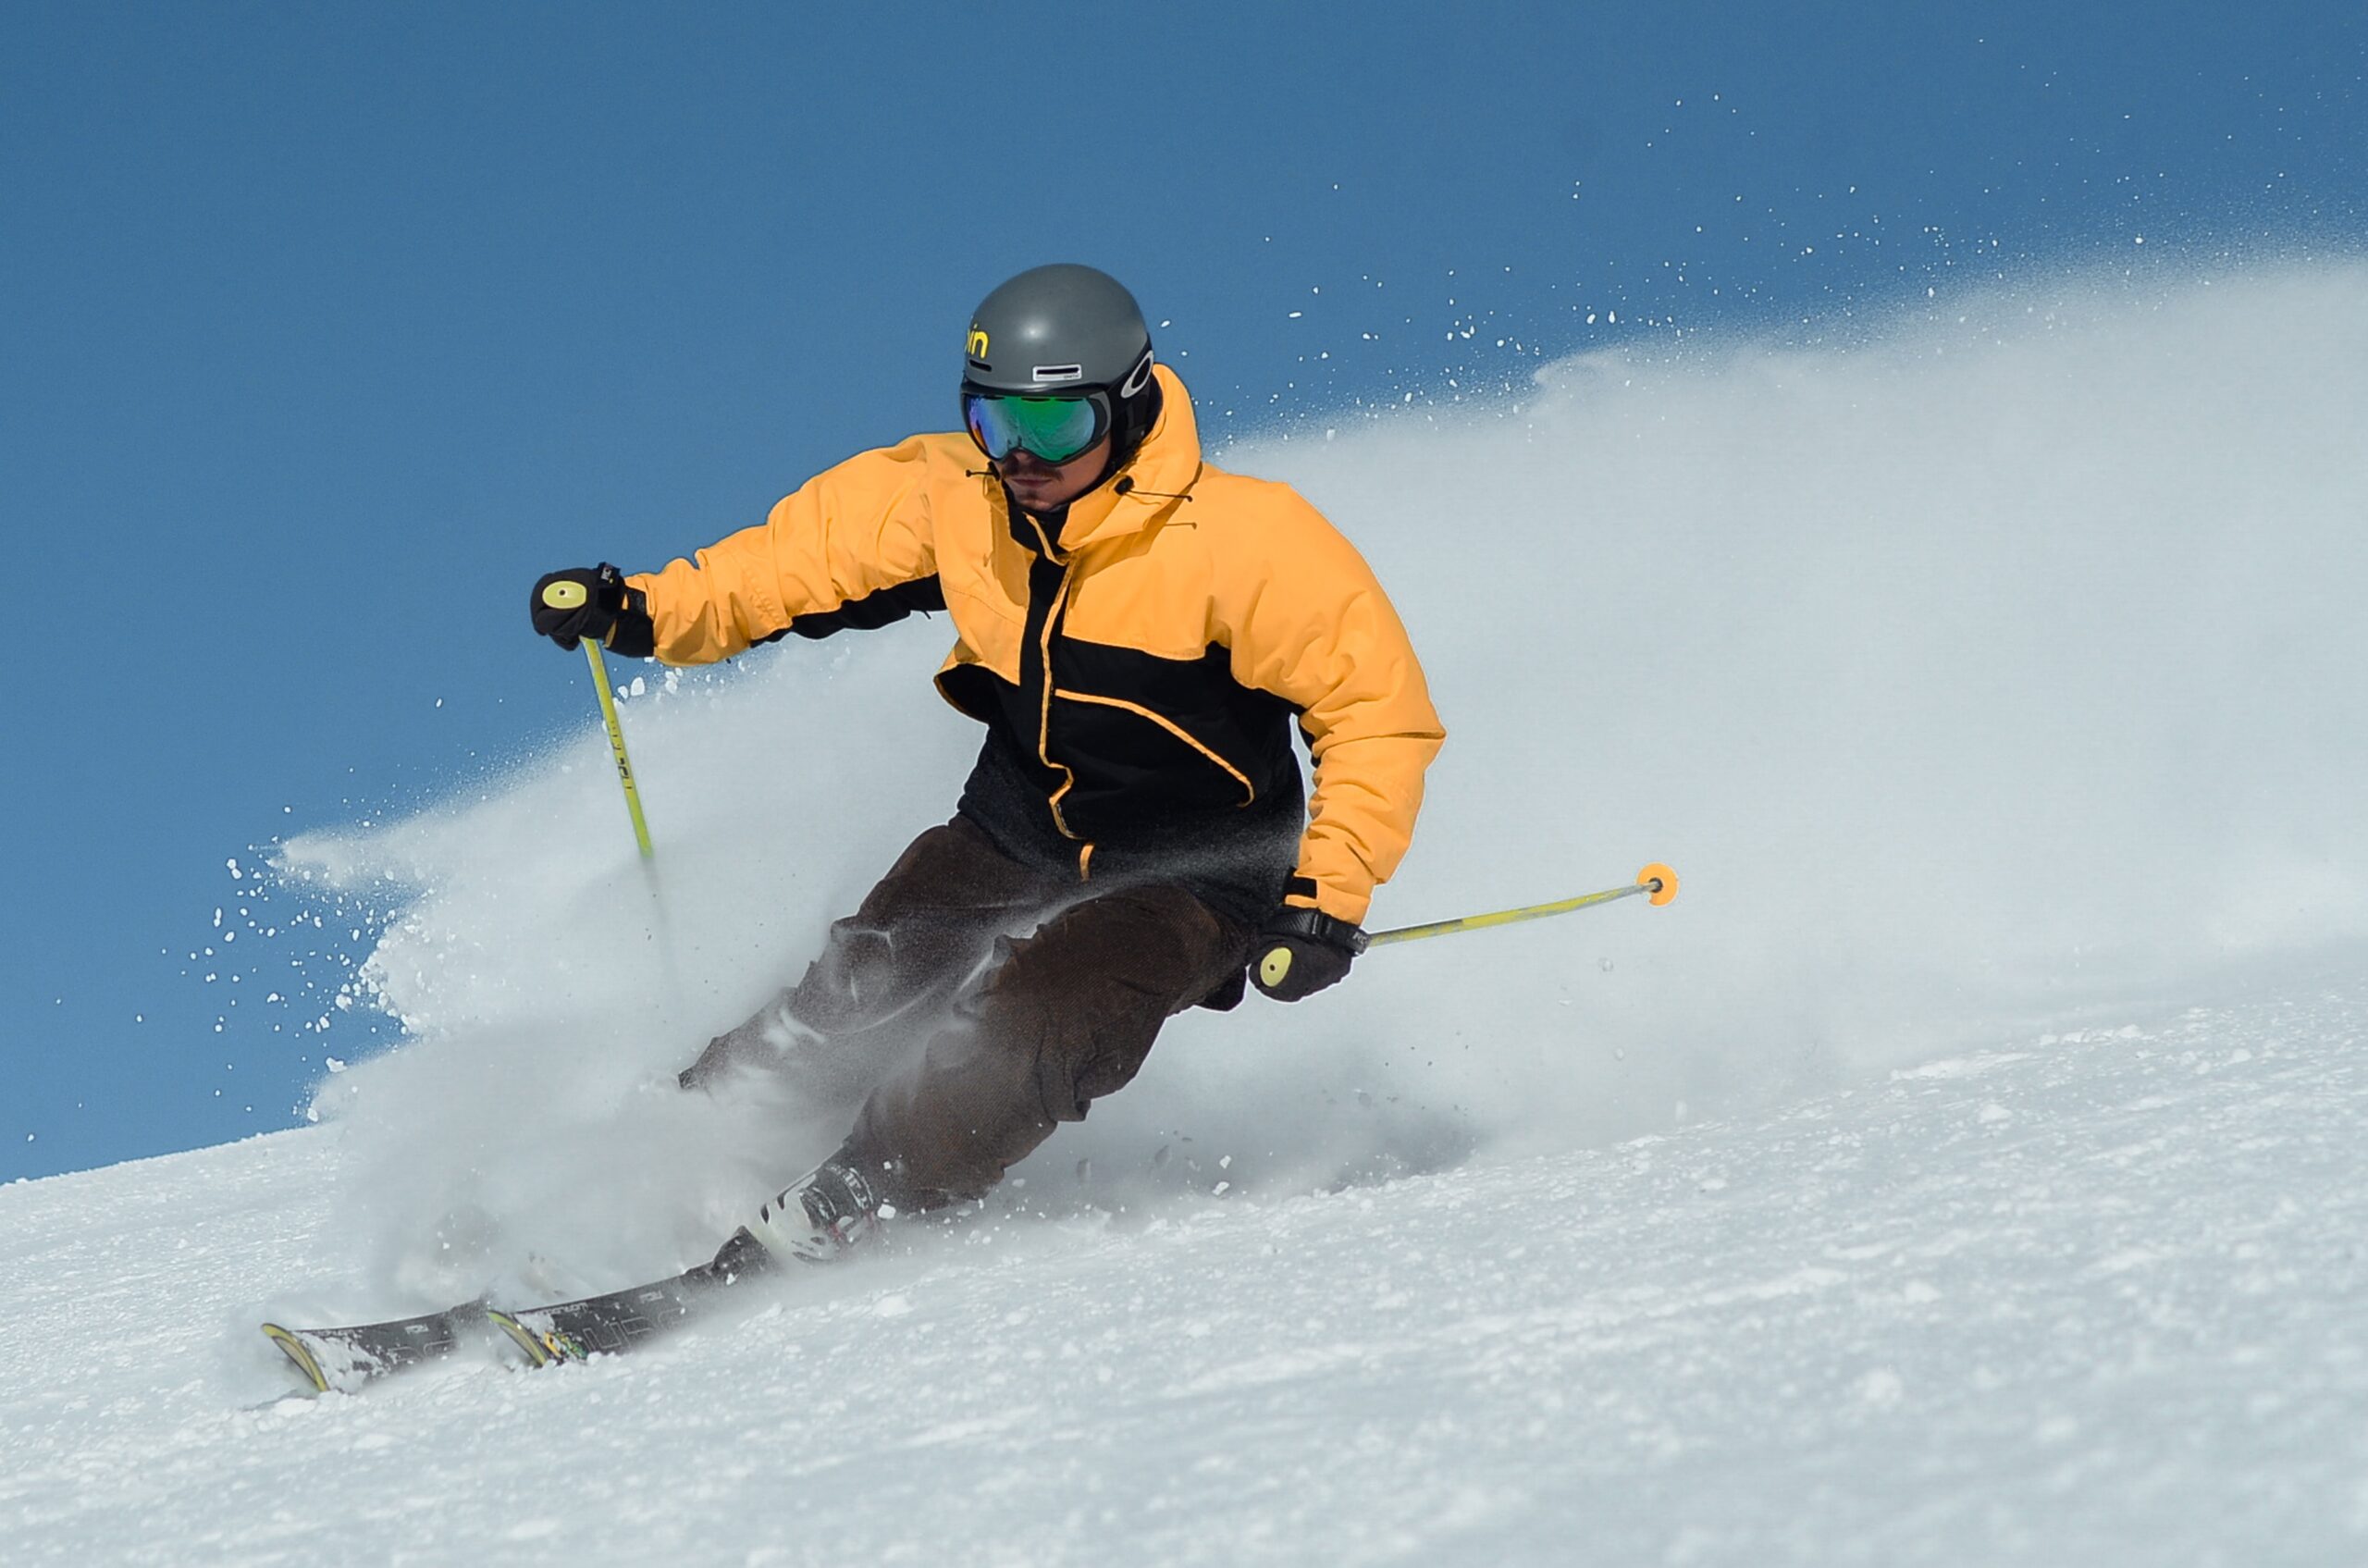 Man skiiing down mountain wearing a yellow and black ski jacket